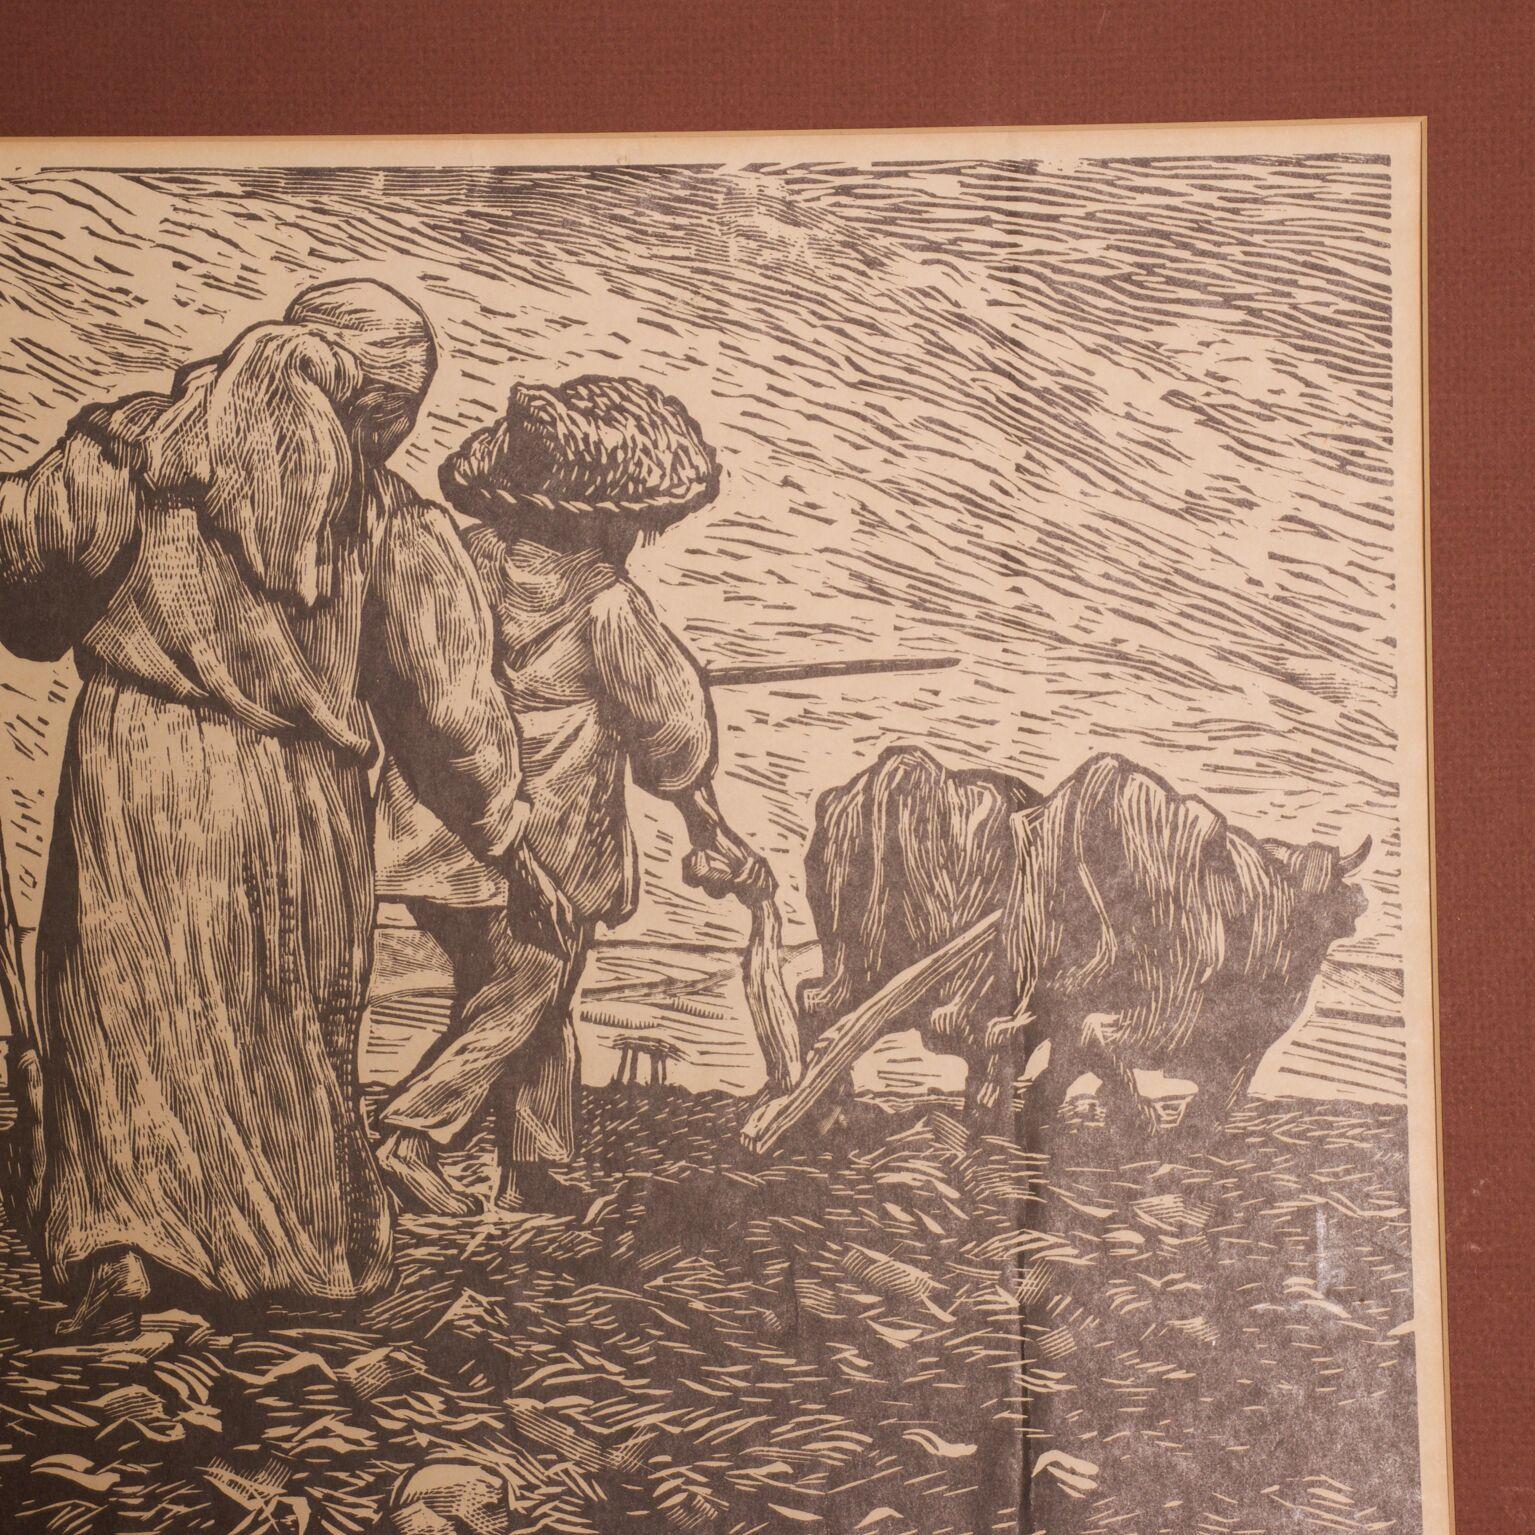 Mid-20th Century Leopoldo Méndez Print Revolutionary Art Mexican Farmers 1940s Mexico